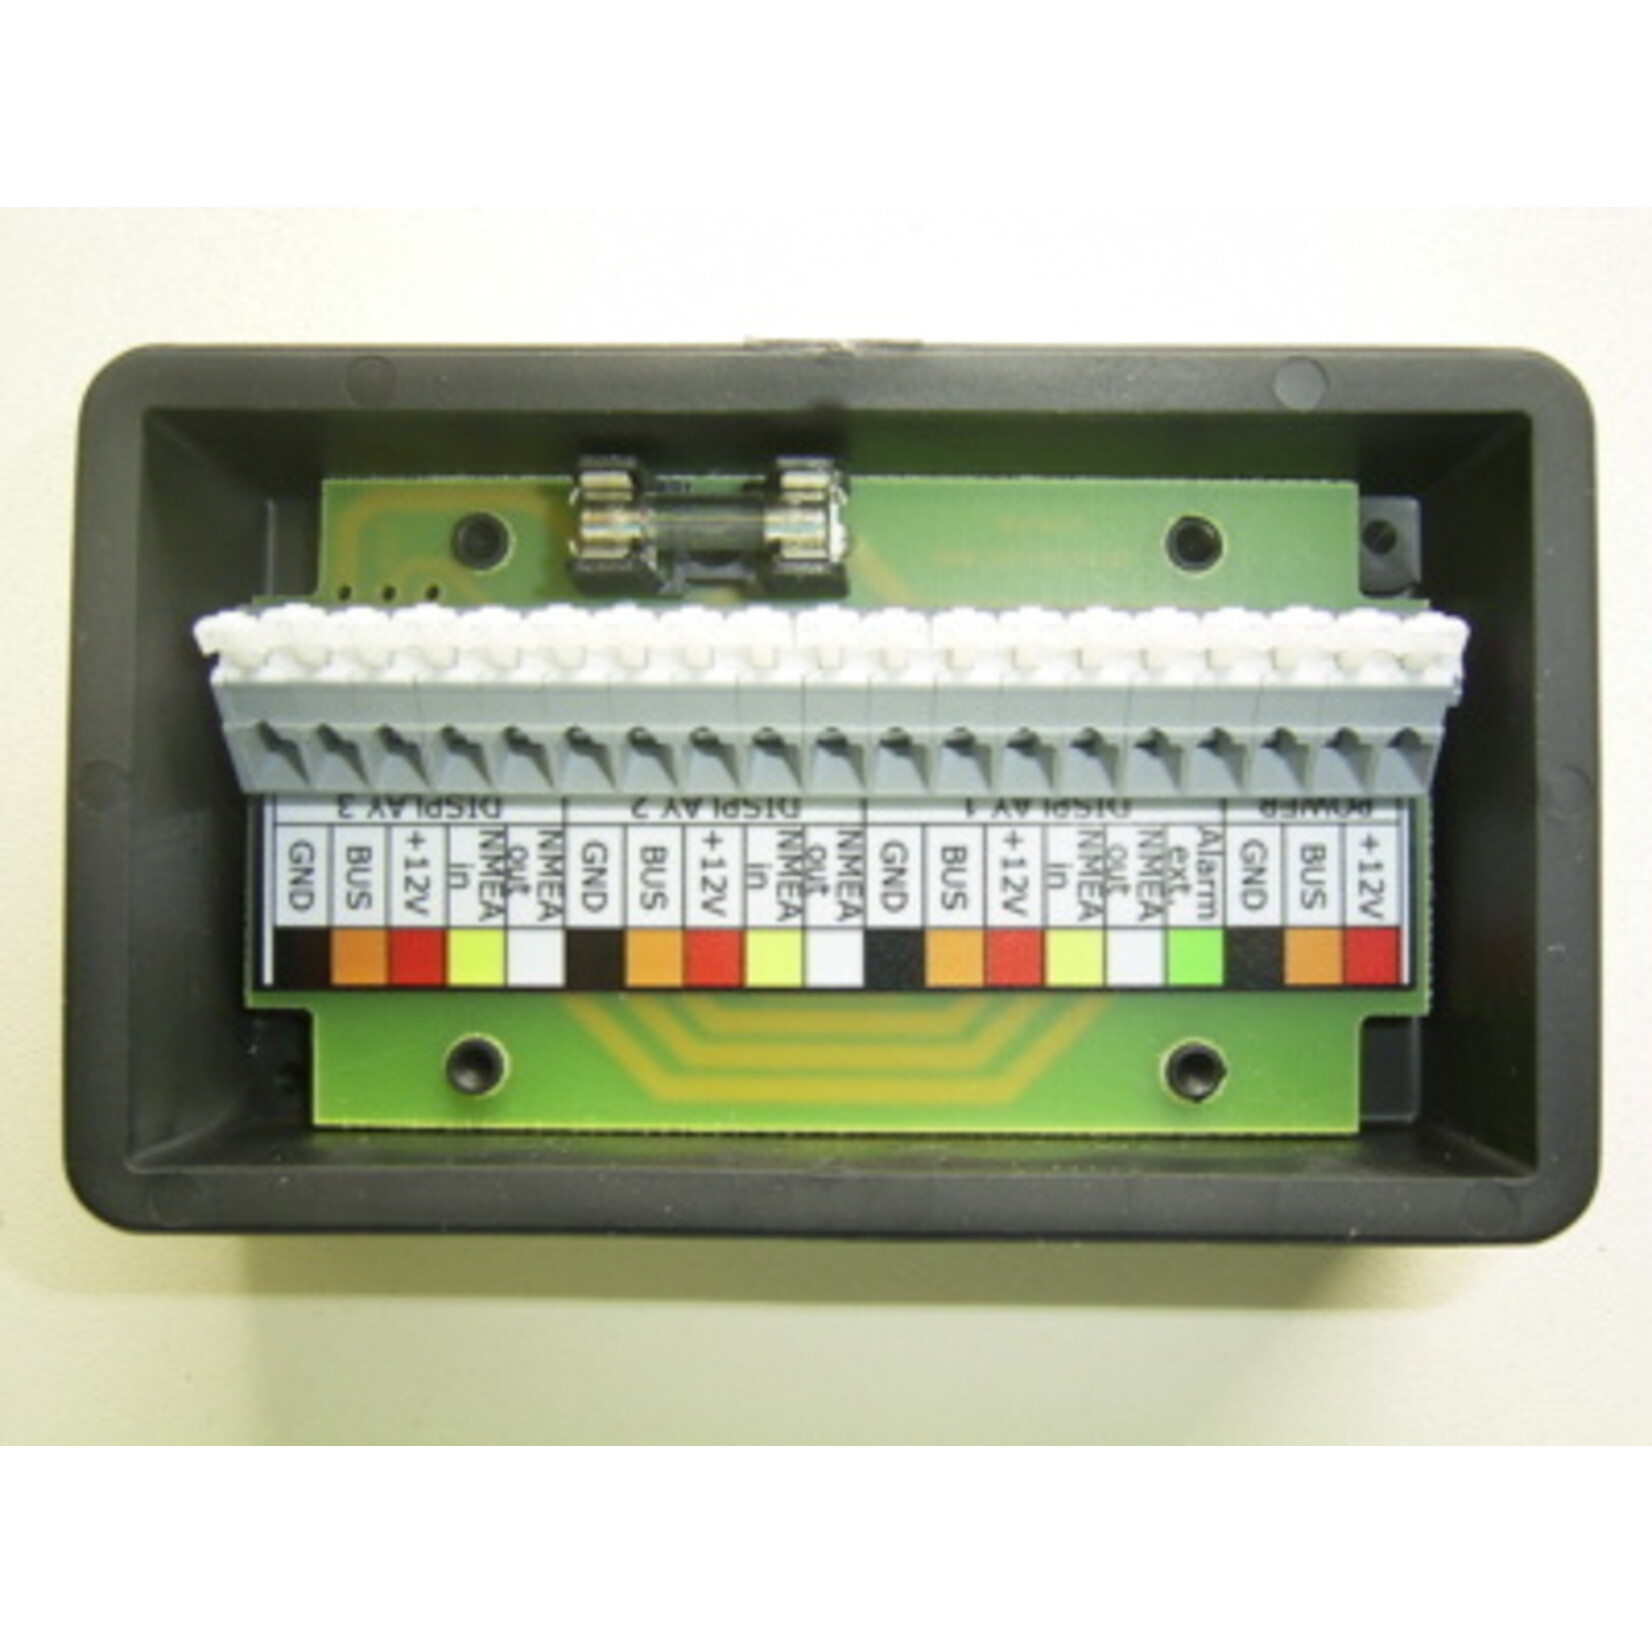 Plastimo Advansea interface bus junction box